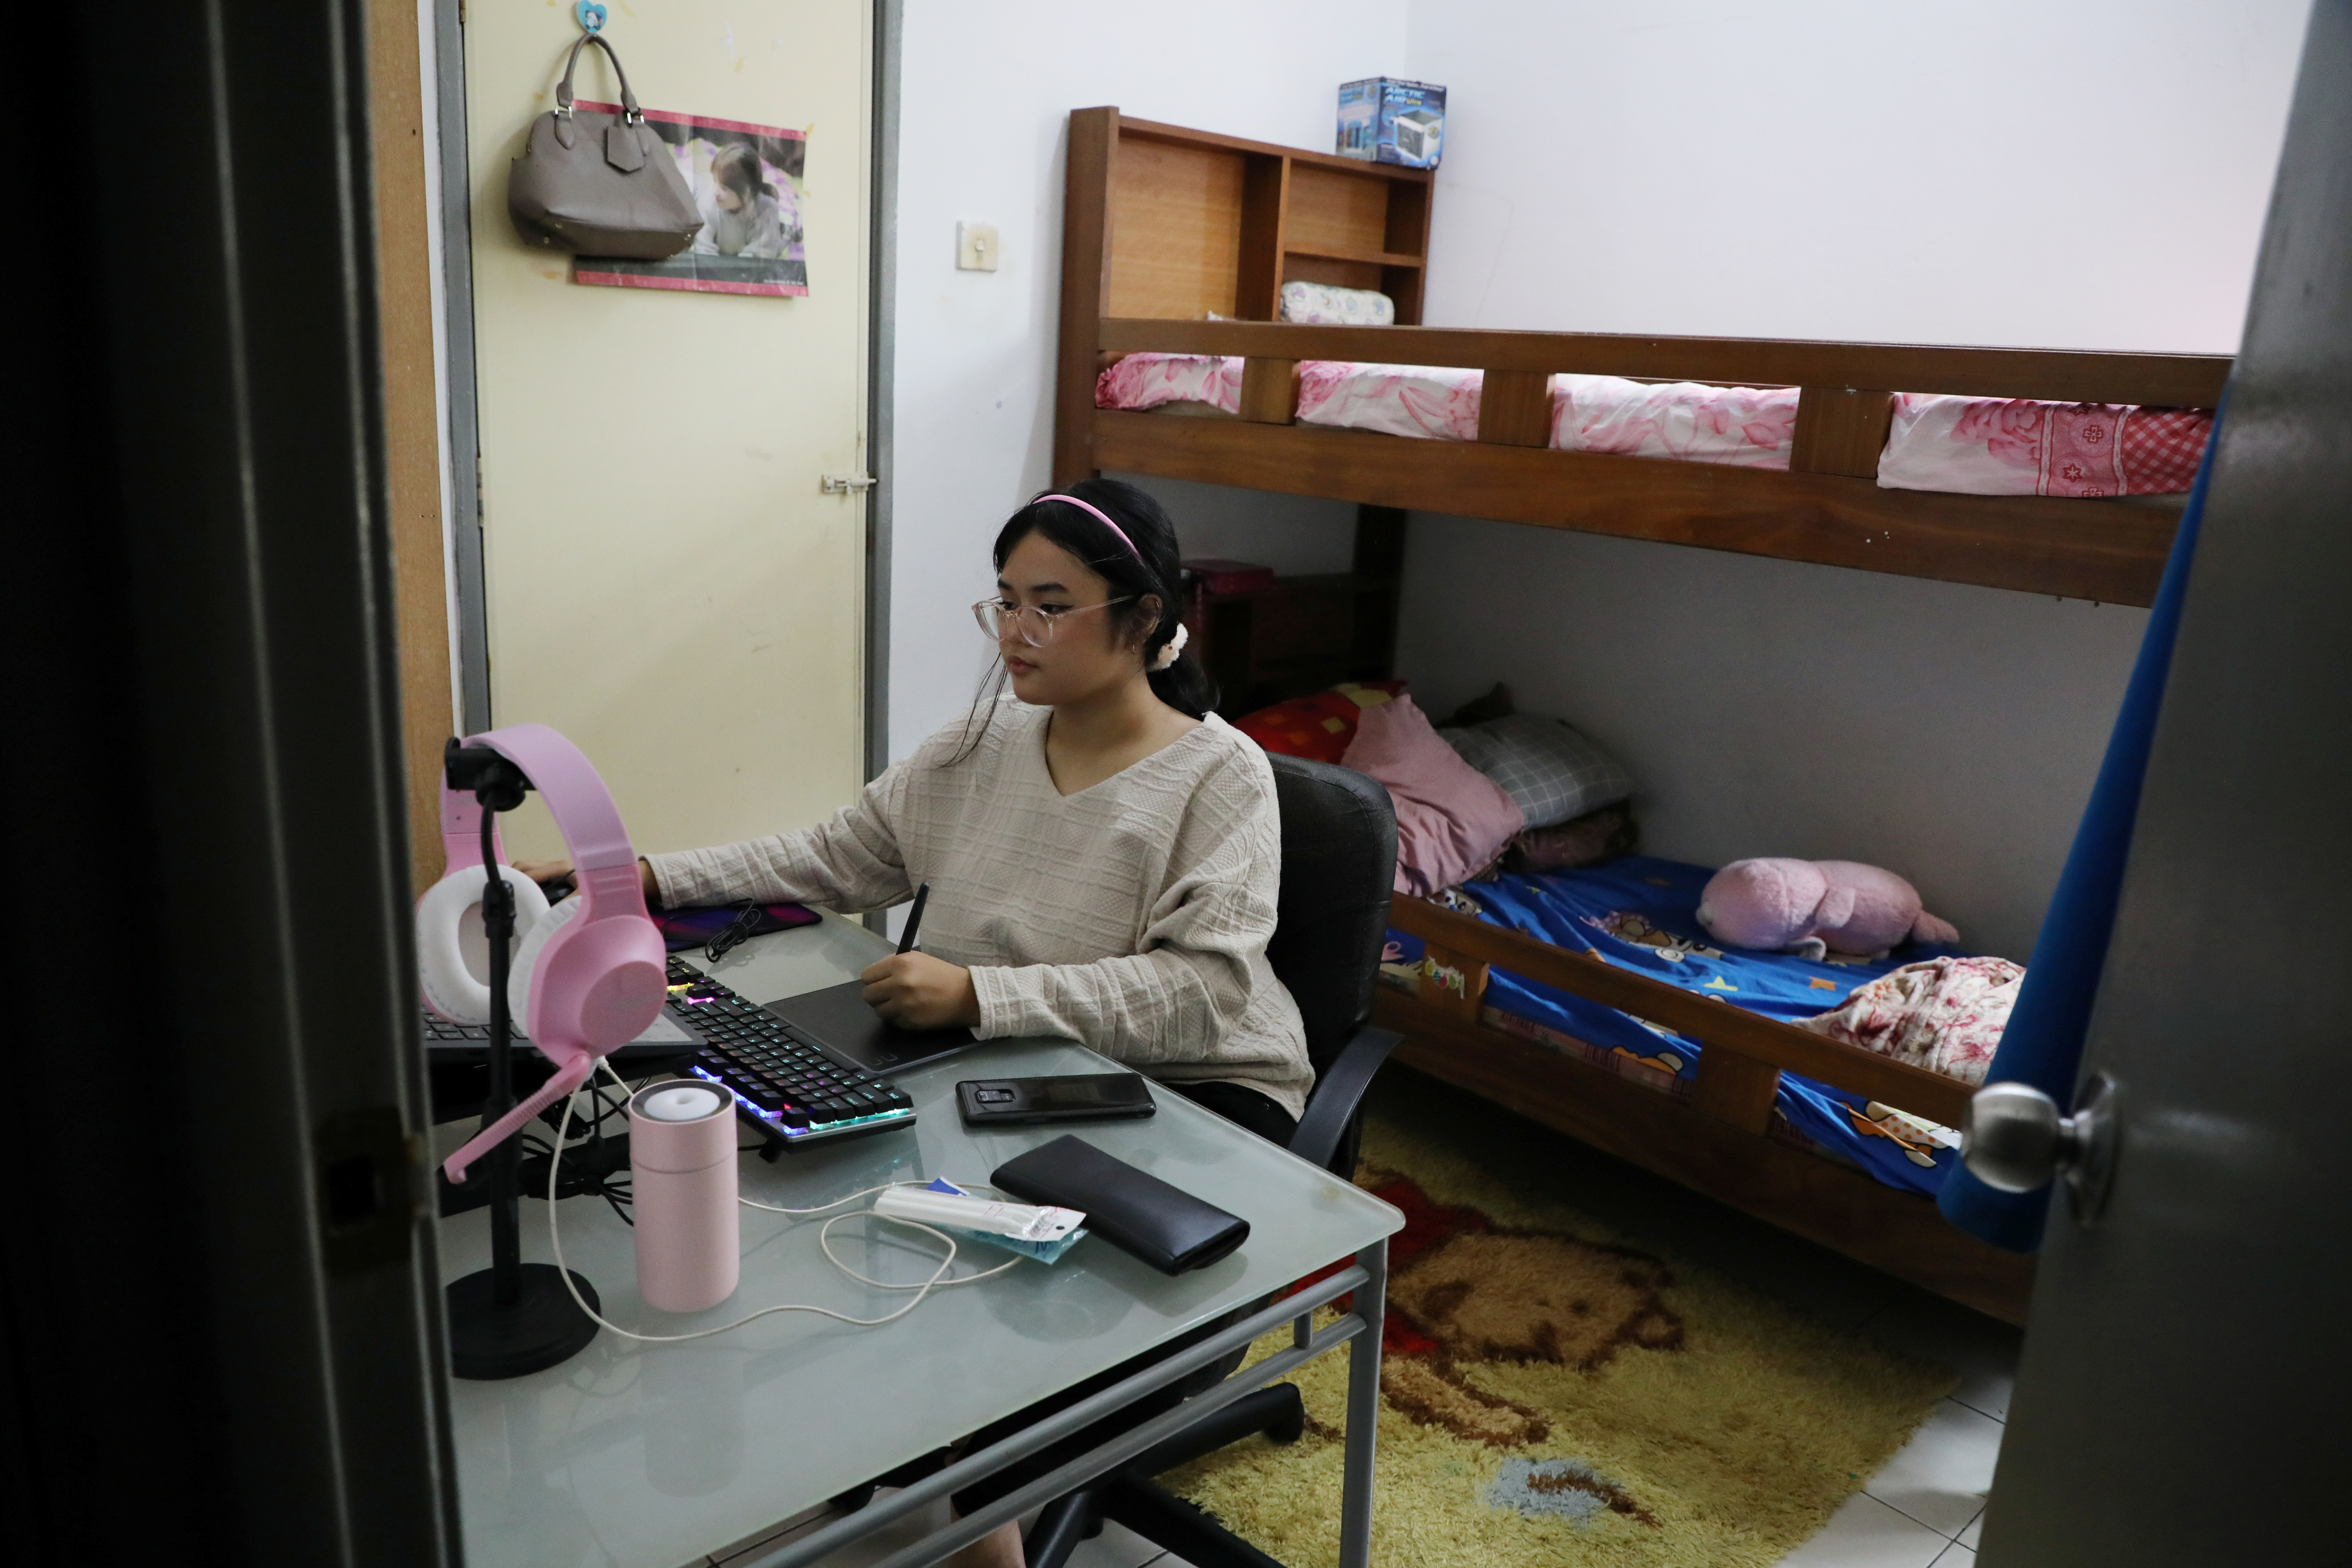 Malaysian teenager Ain Husniza Saiful Nizam uses a computer in her bedroom in Kuala Selangor